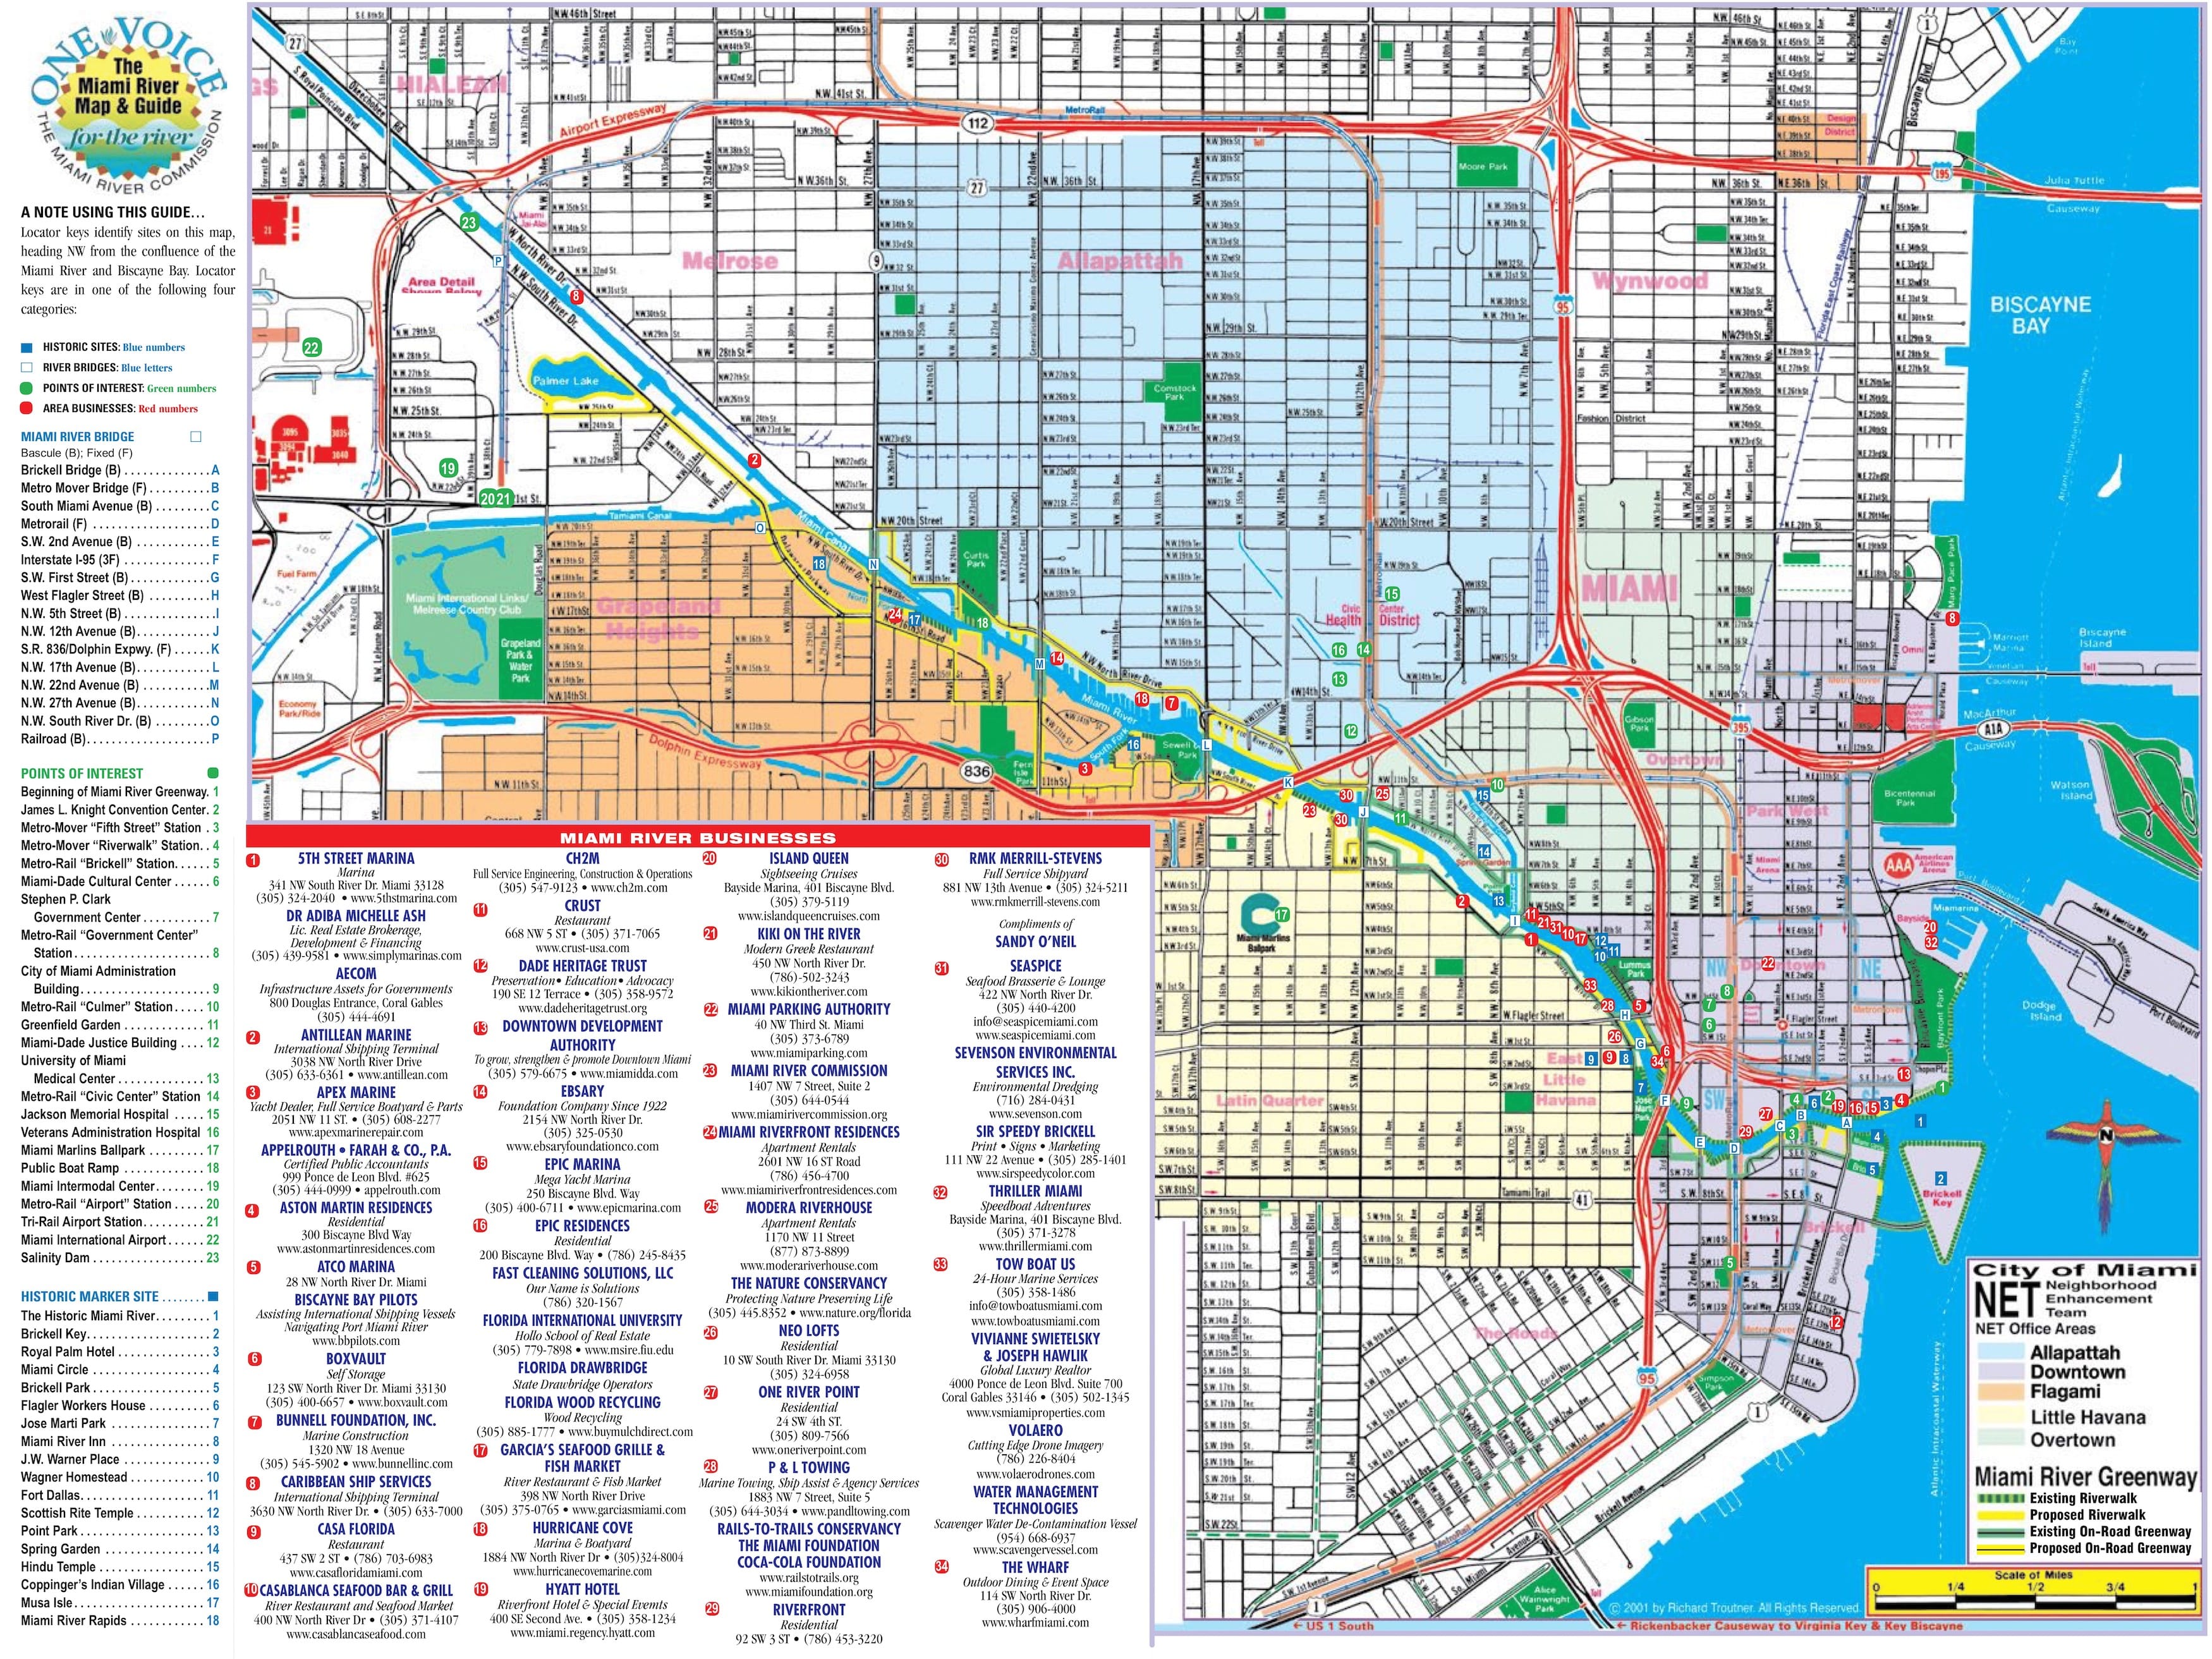 EMH3 Miami River Real Estate 2018 Map Guide